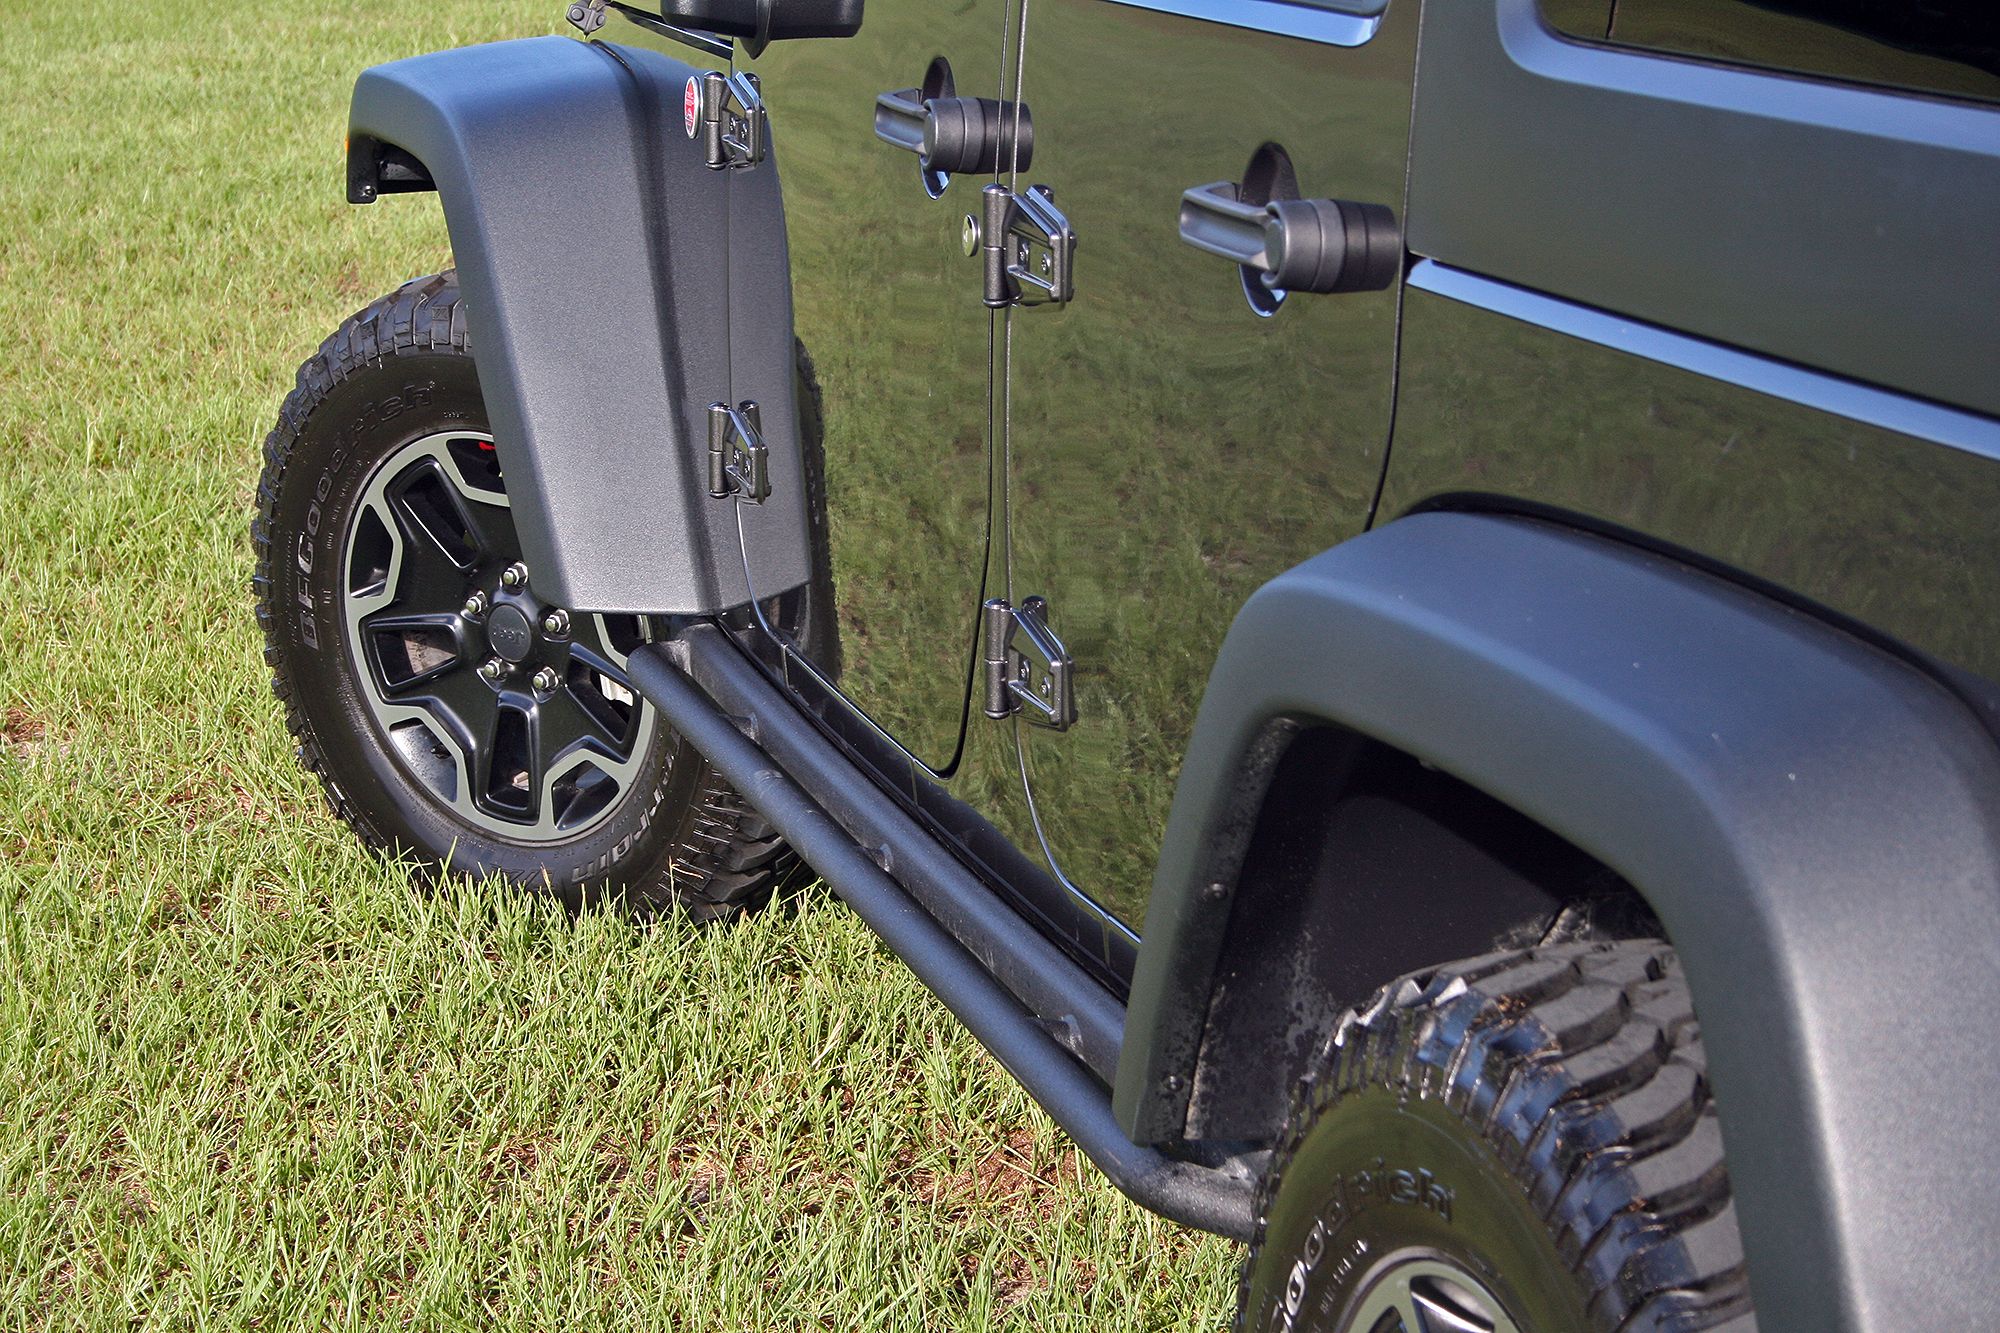 2017 Jeep Wrangler Unlimited Rubicon Hard Rock – Driven